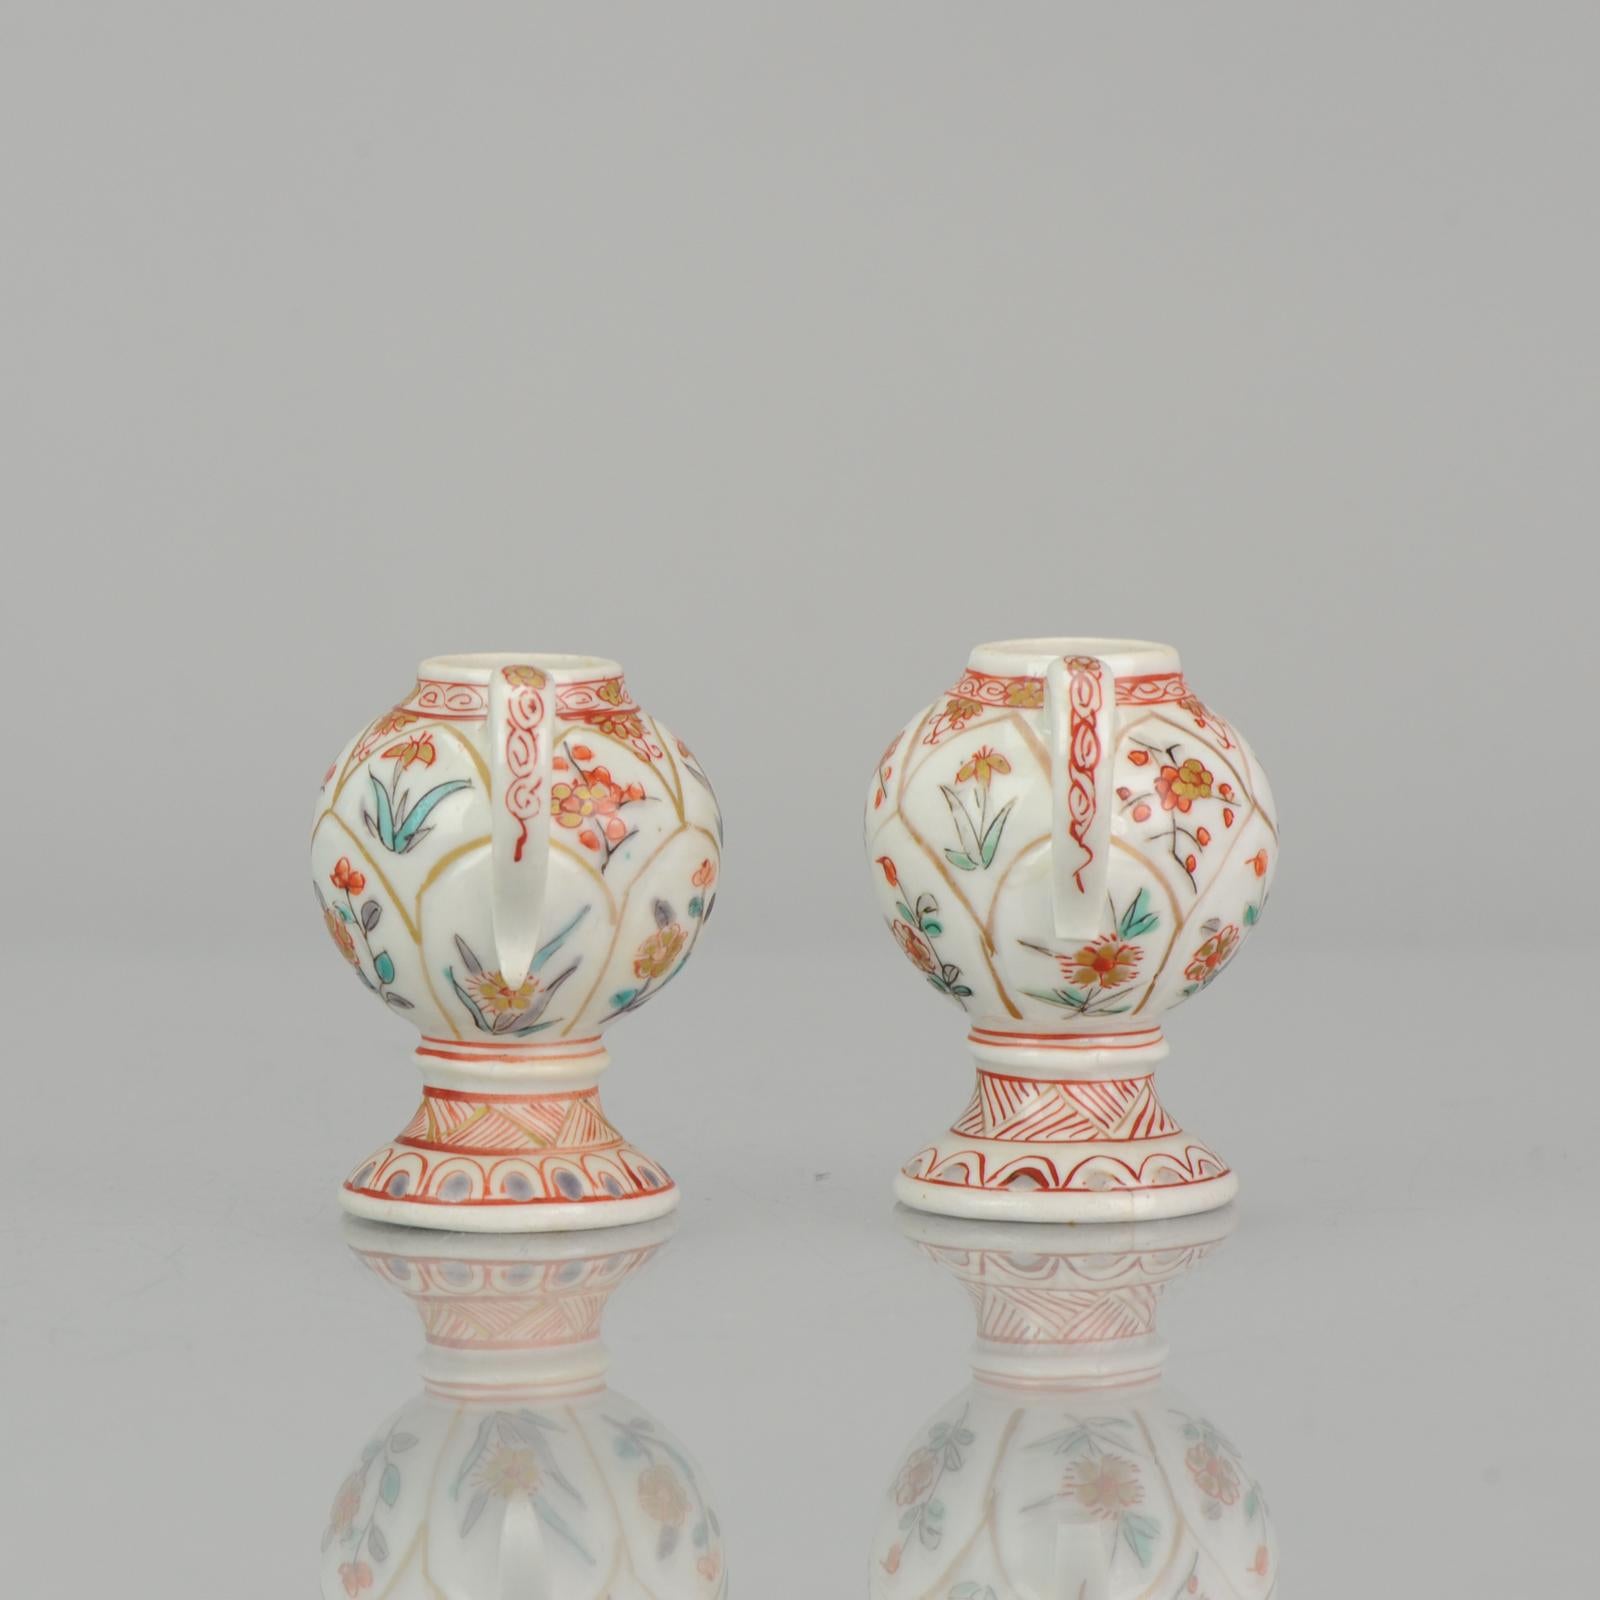 Porcelain Unusual Antique 1690-1720 Japanese Imari Mustard Pots Arita Edo Japan For Sale